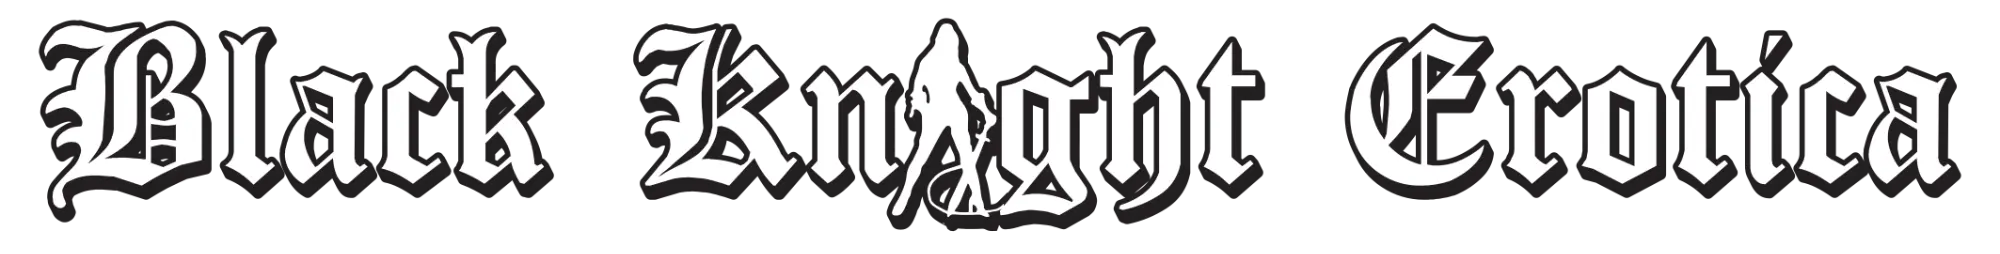 Black Knight Erotica Logo White Lettering Heavy Shads